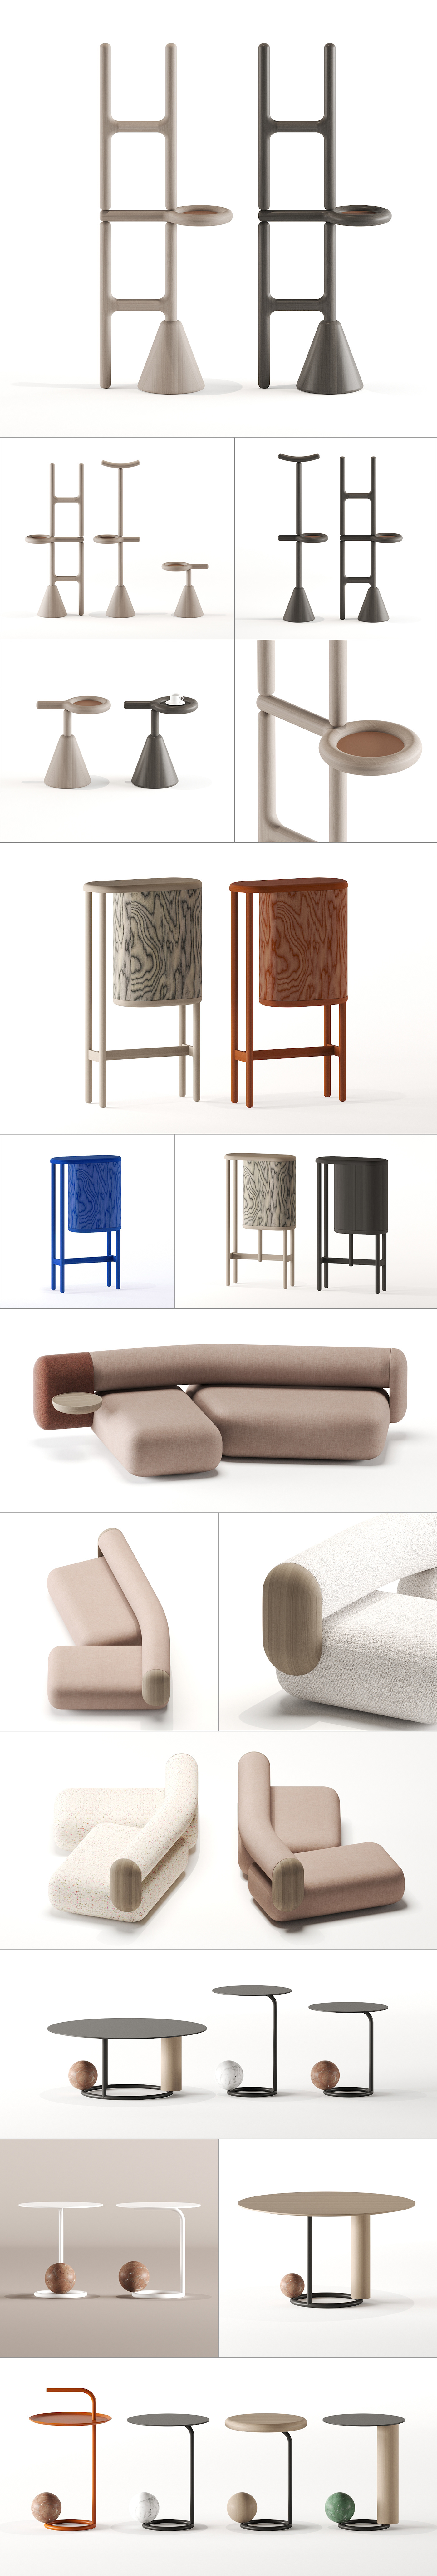 design furniture design  Interior architecture wooden product design  concept design art table coat hanger